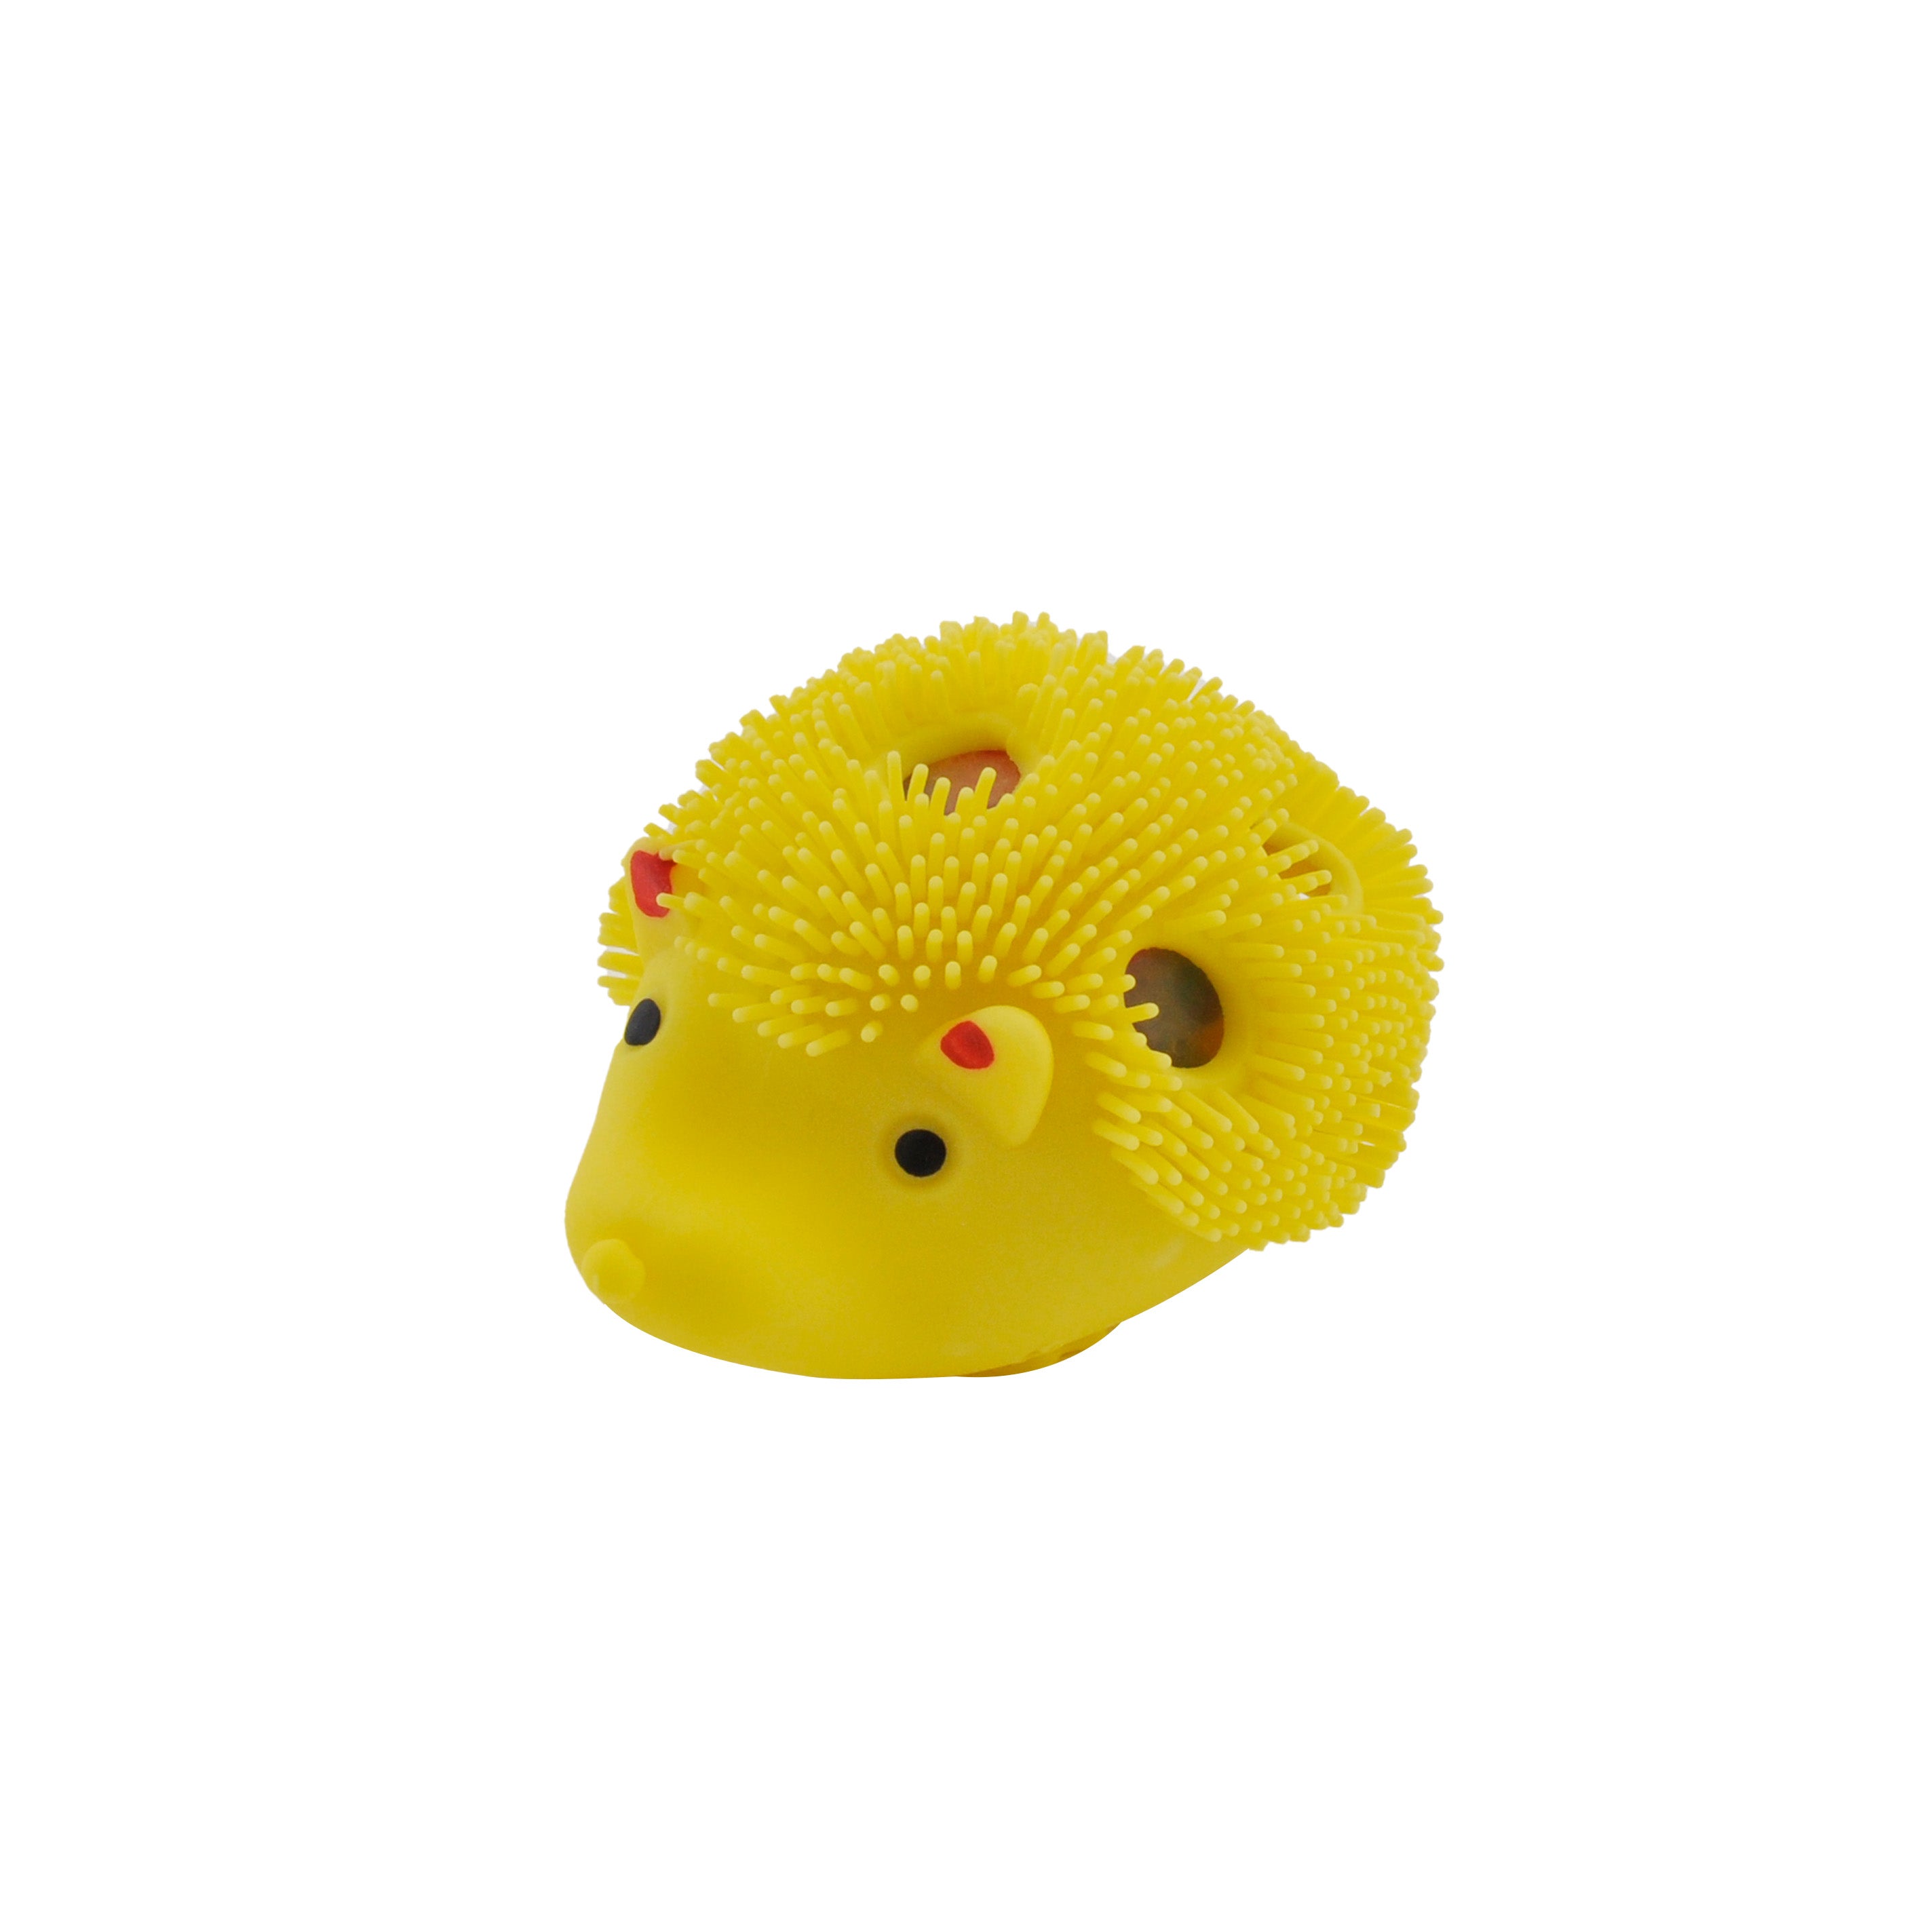 Squishy Hedgehog - Yellow